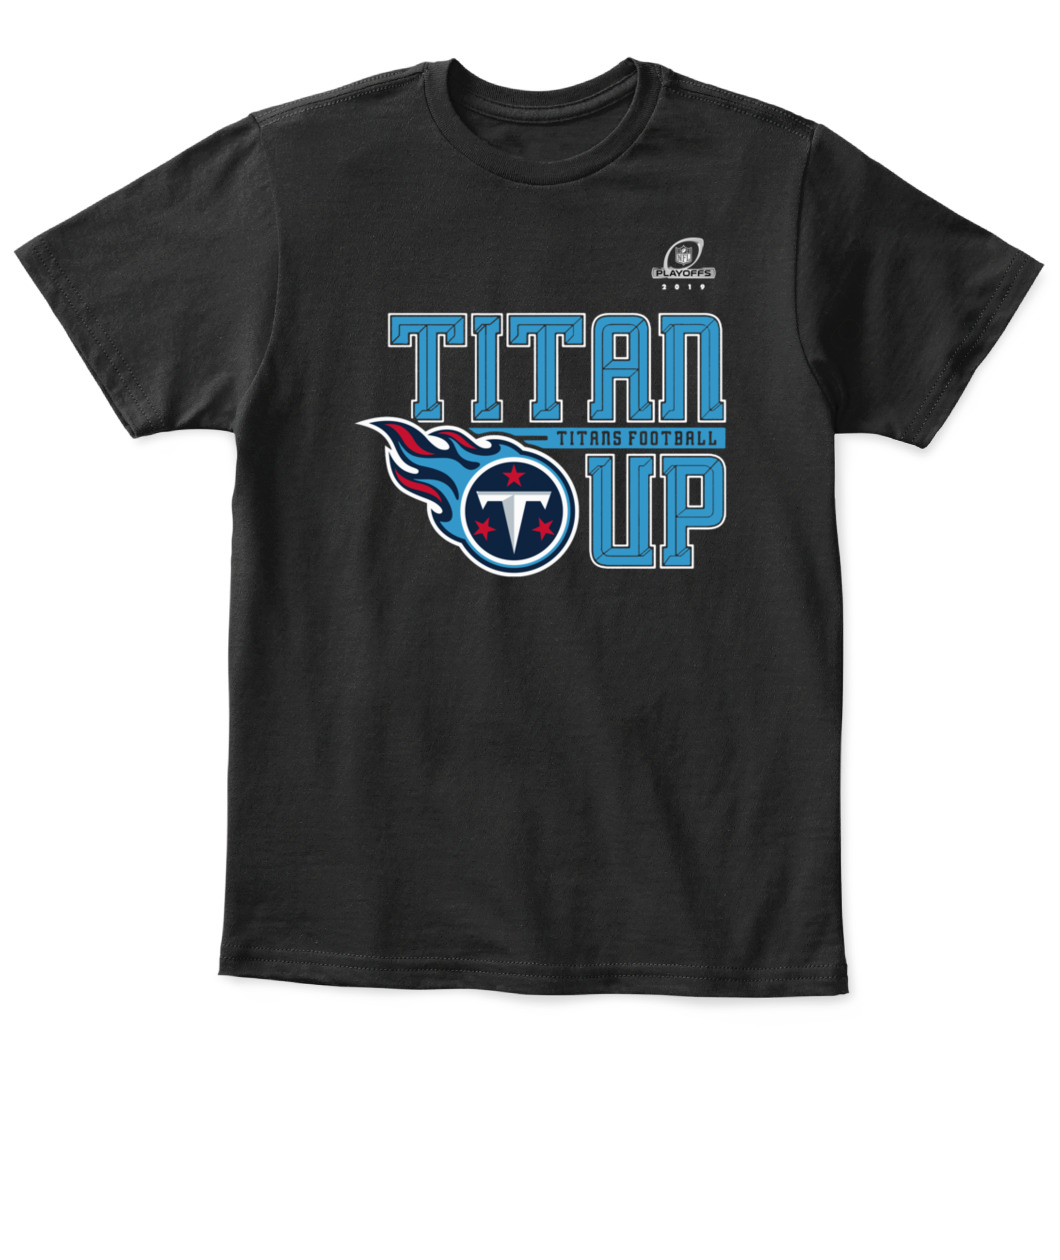 titans playoff shirt